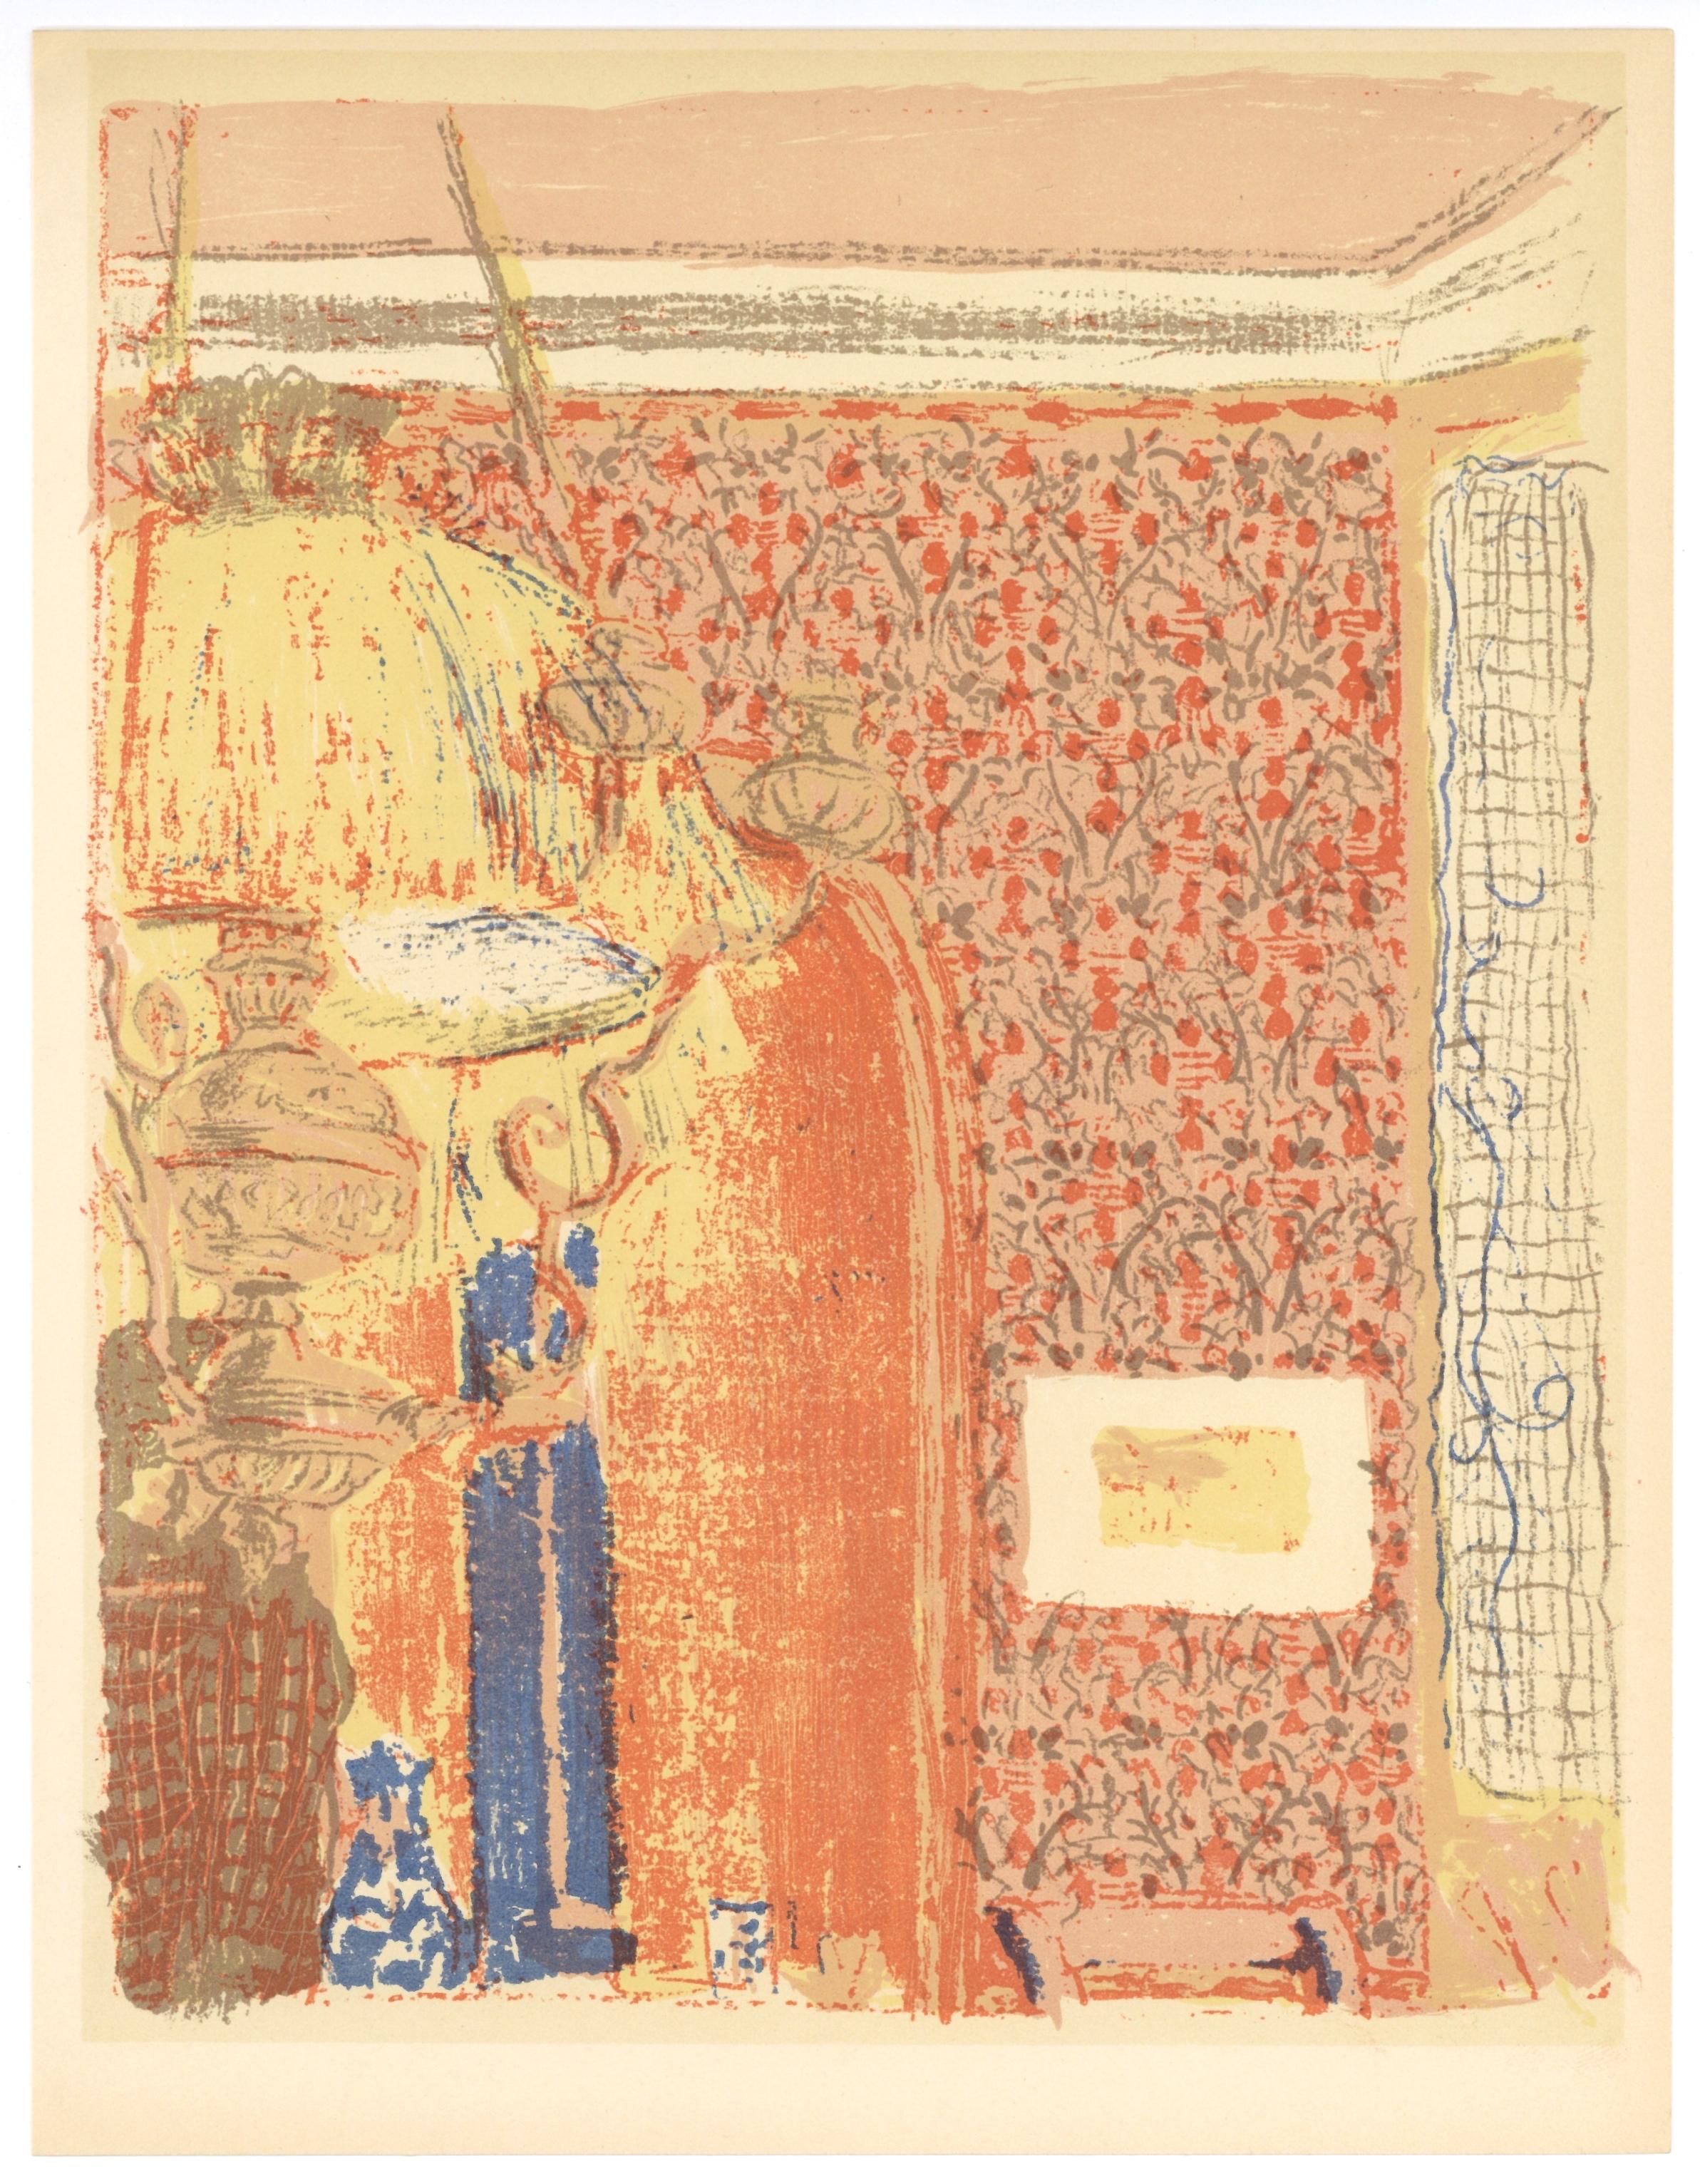 "Interieur aux tentures roses II" lithograph - Print by (after) Edouard Vuillard